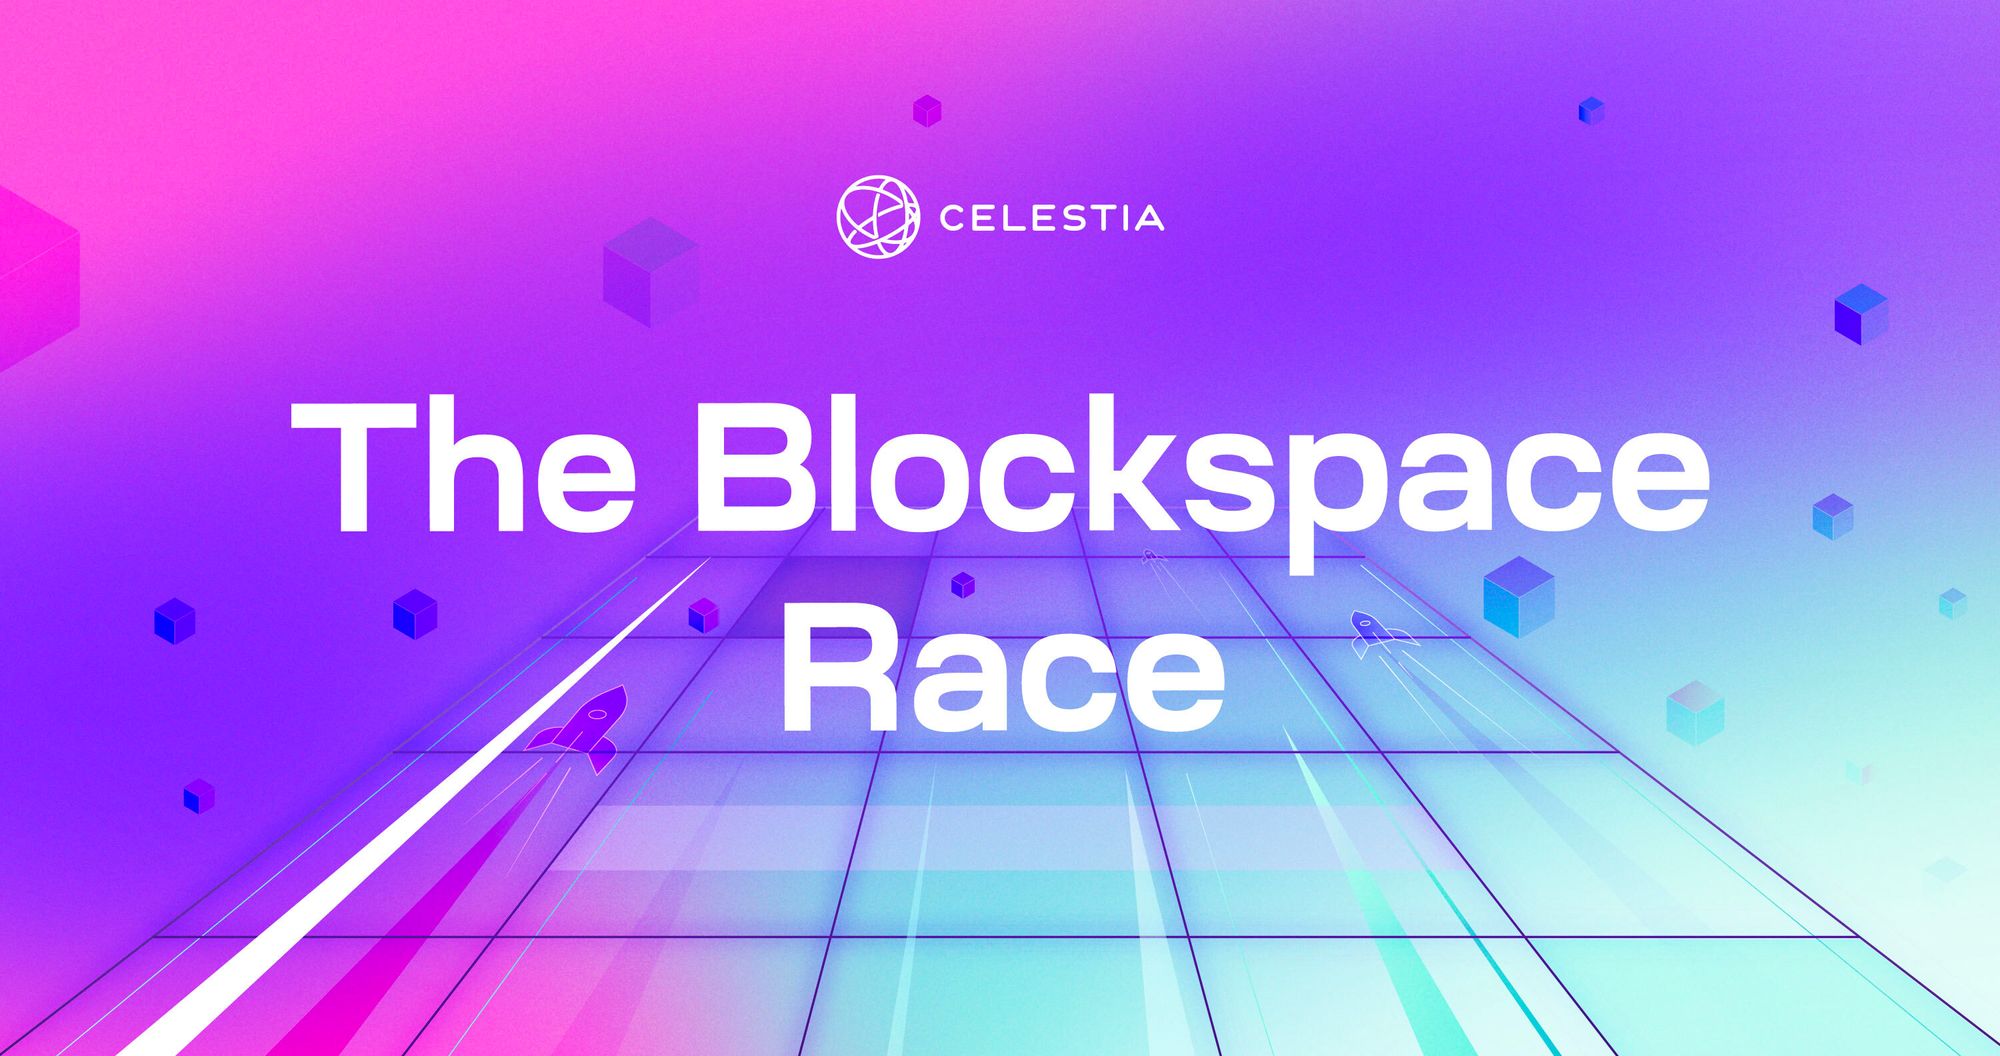 The Blockspace Race